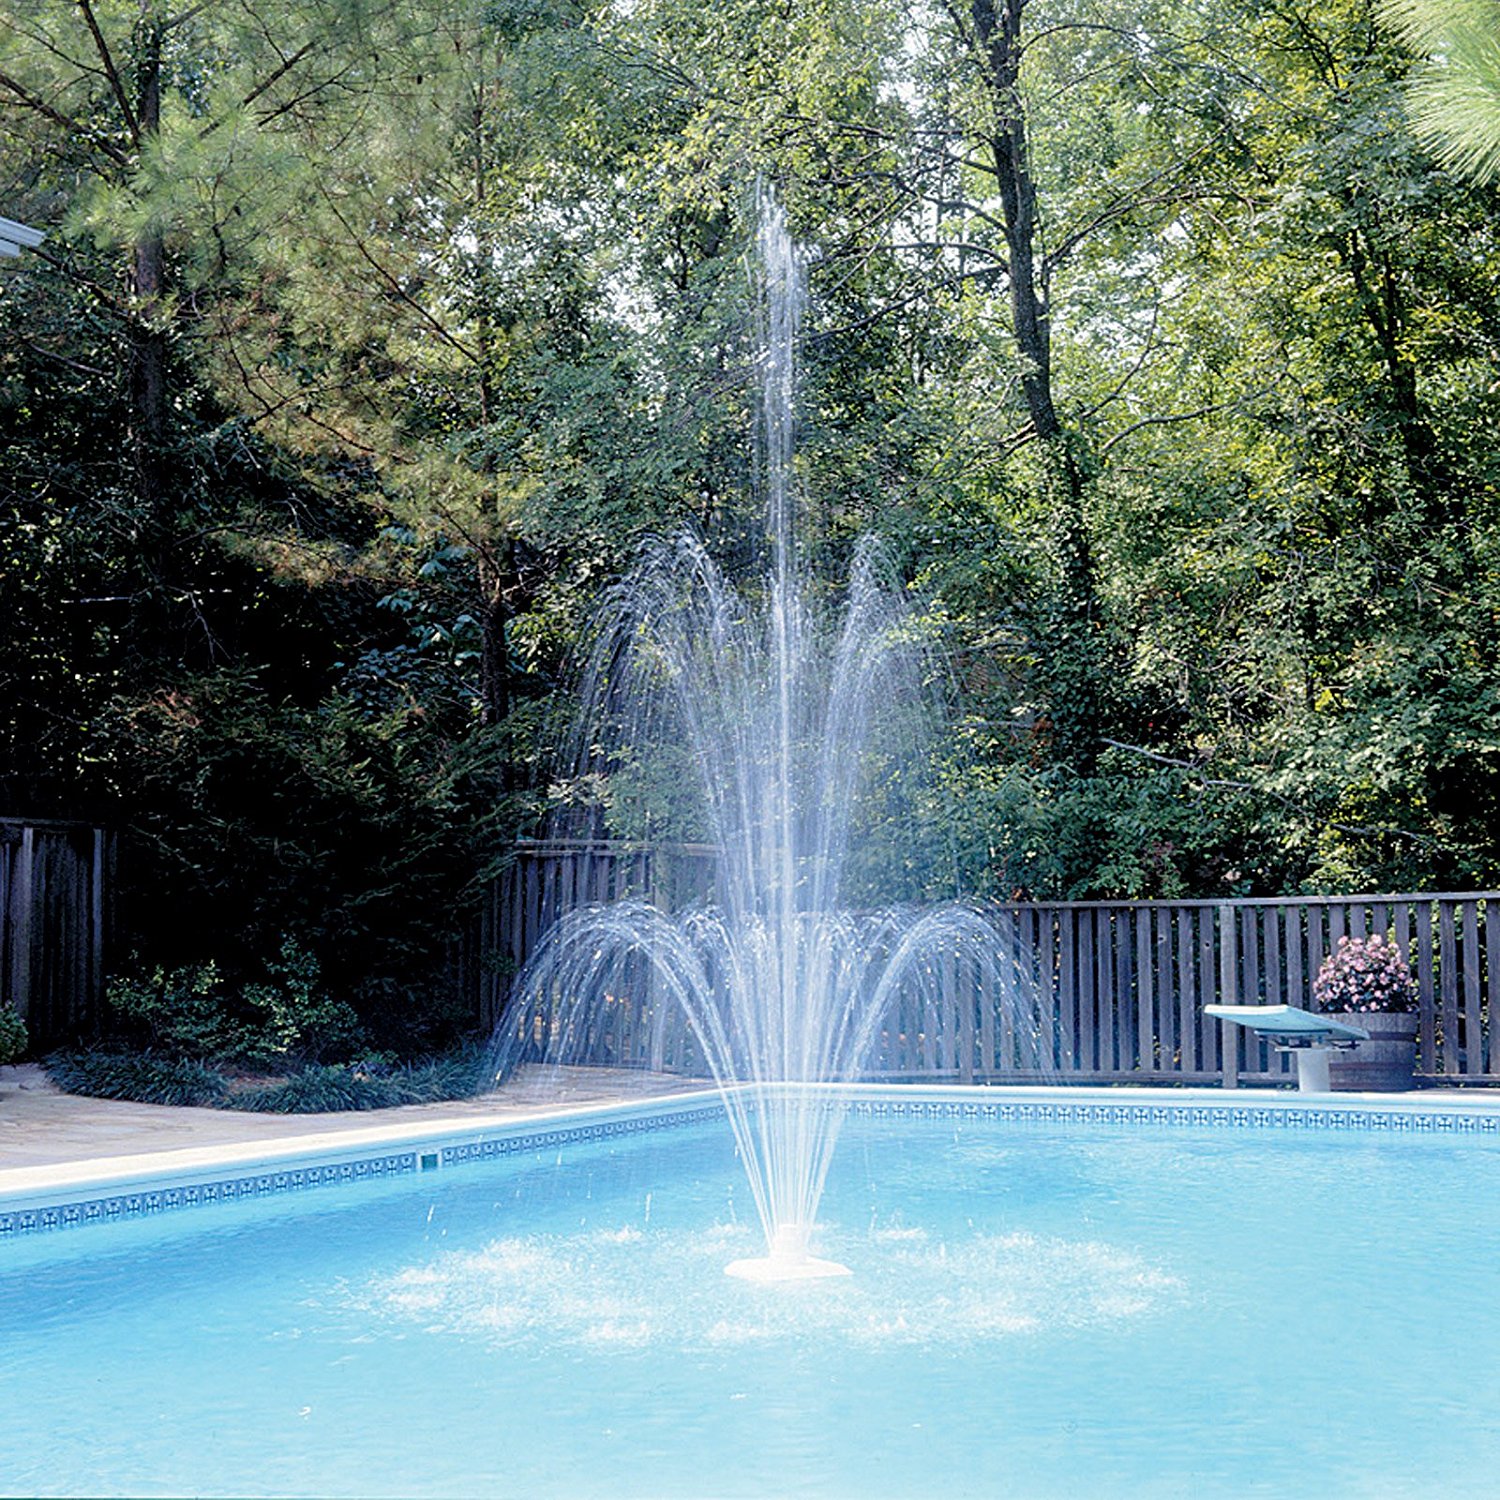 Amazon.com : Sparkling Standard 3-Tier Swimming Pool Fountain : Free ...